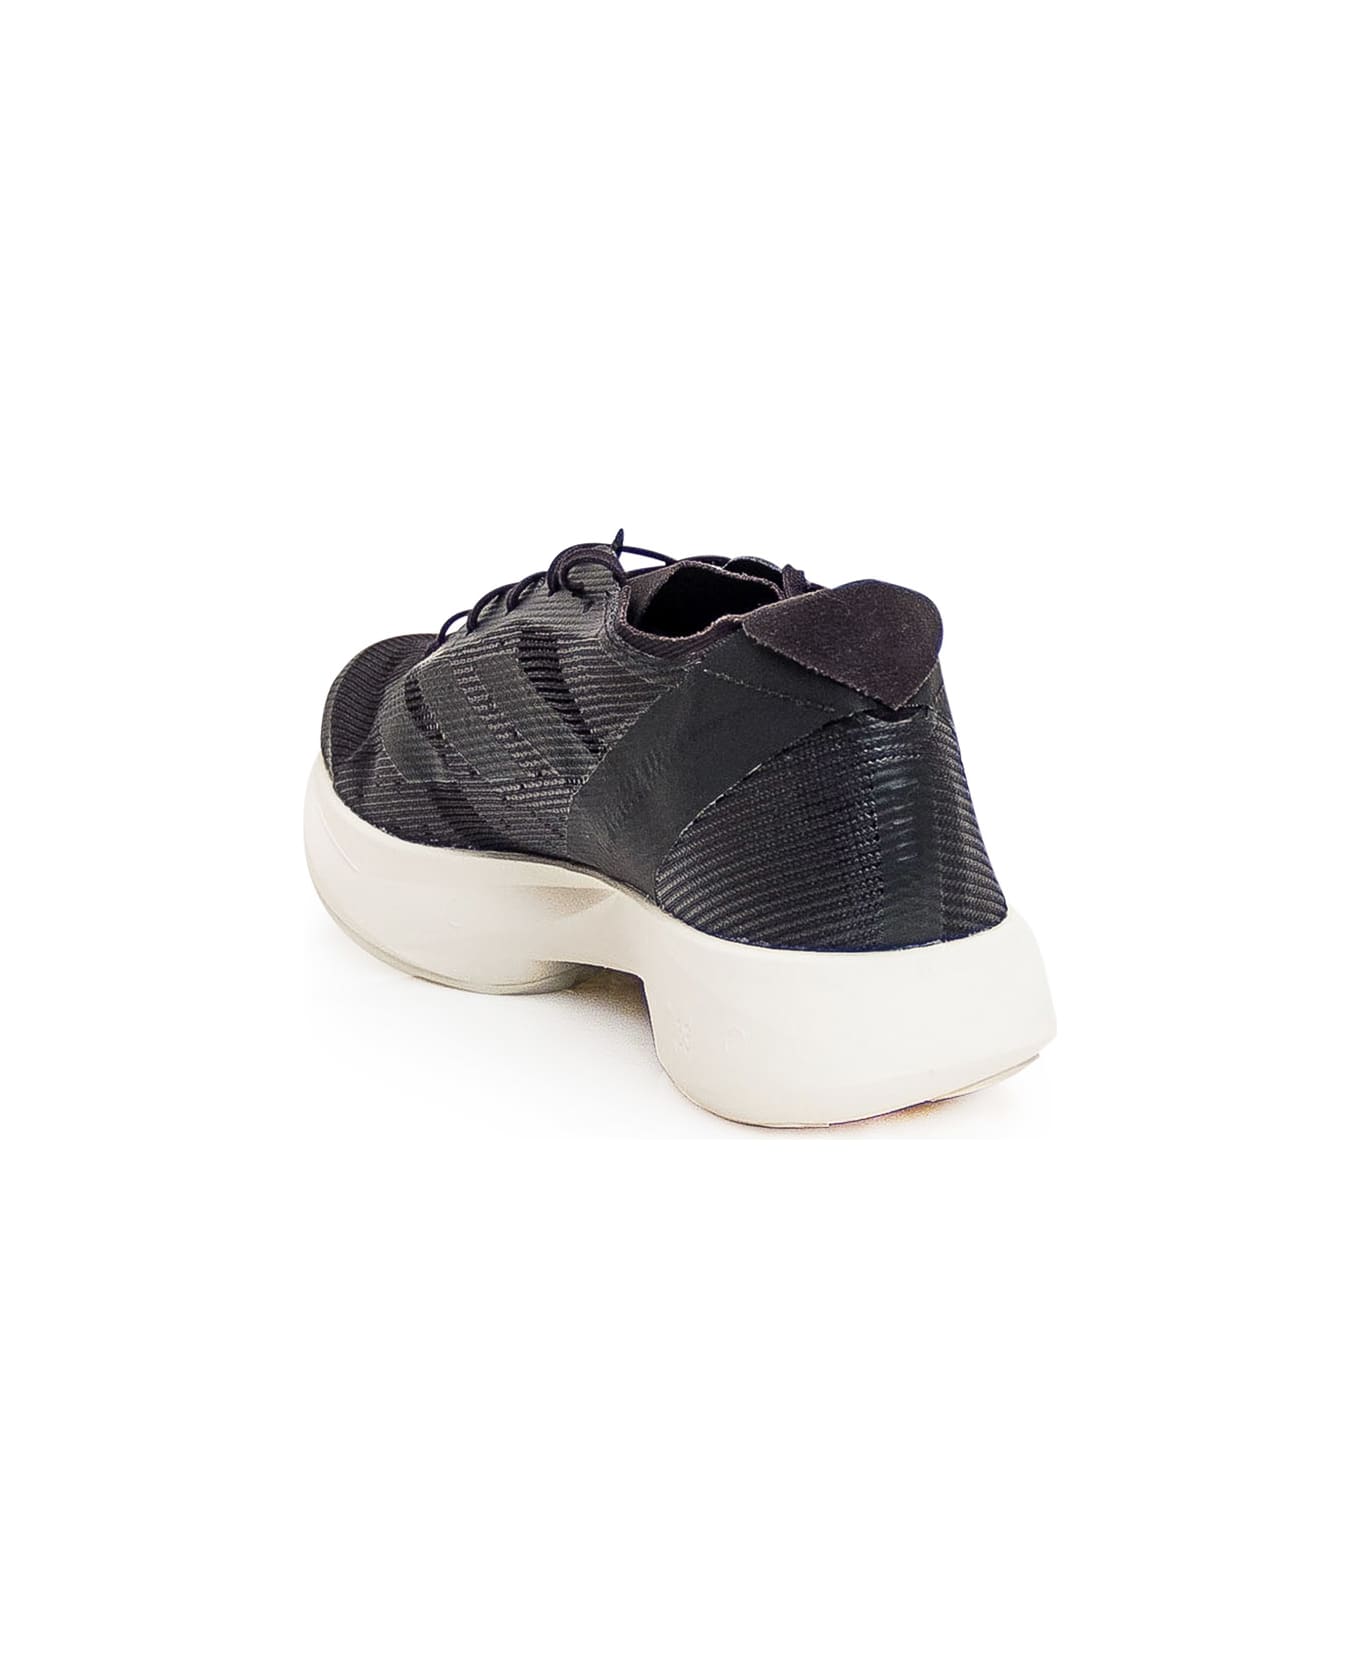 Y-3 Takumi Sen Sneaker - BLACK/BLACK/OWHITE スニーカー